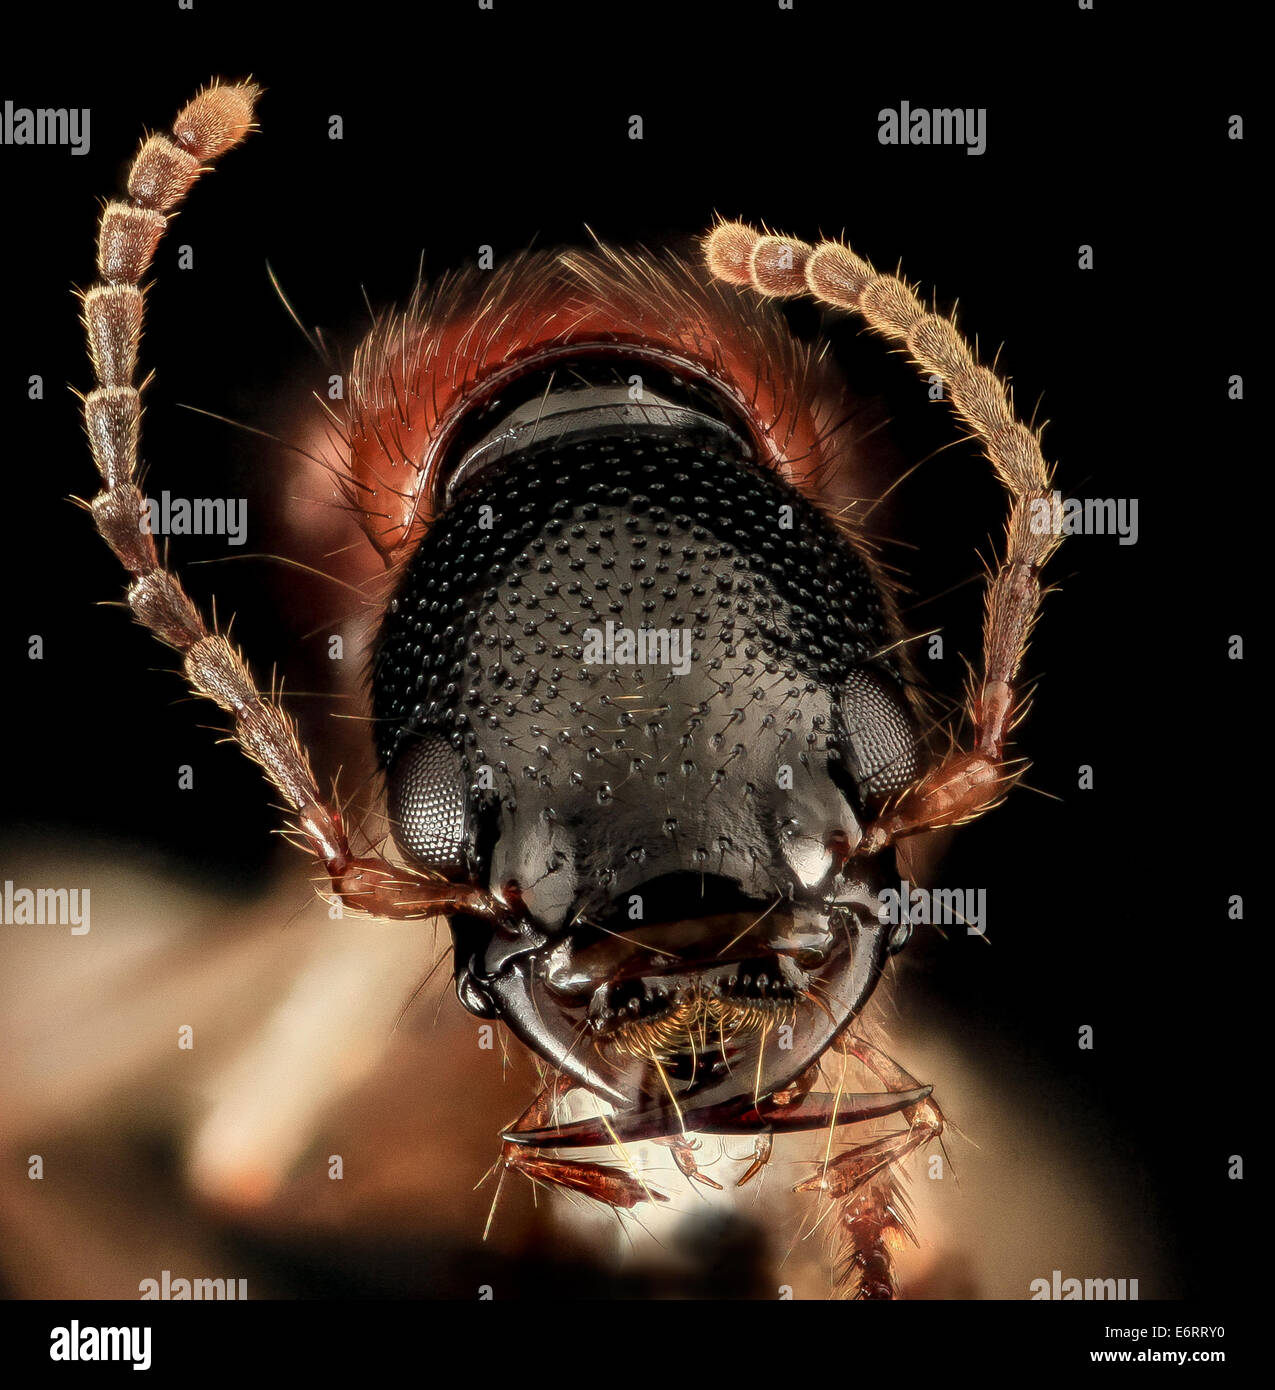 rove-beetle-u-face-upper-marlboro-md2013-08-21-163444-zs-pmax9639346589o-E6RRY0.jpg